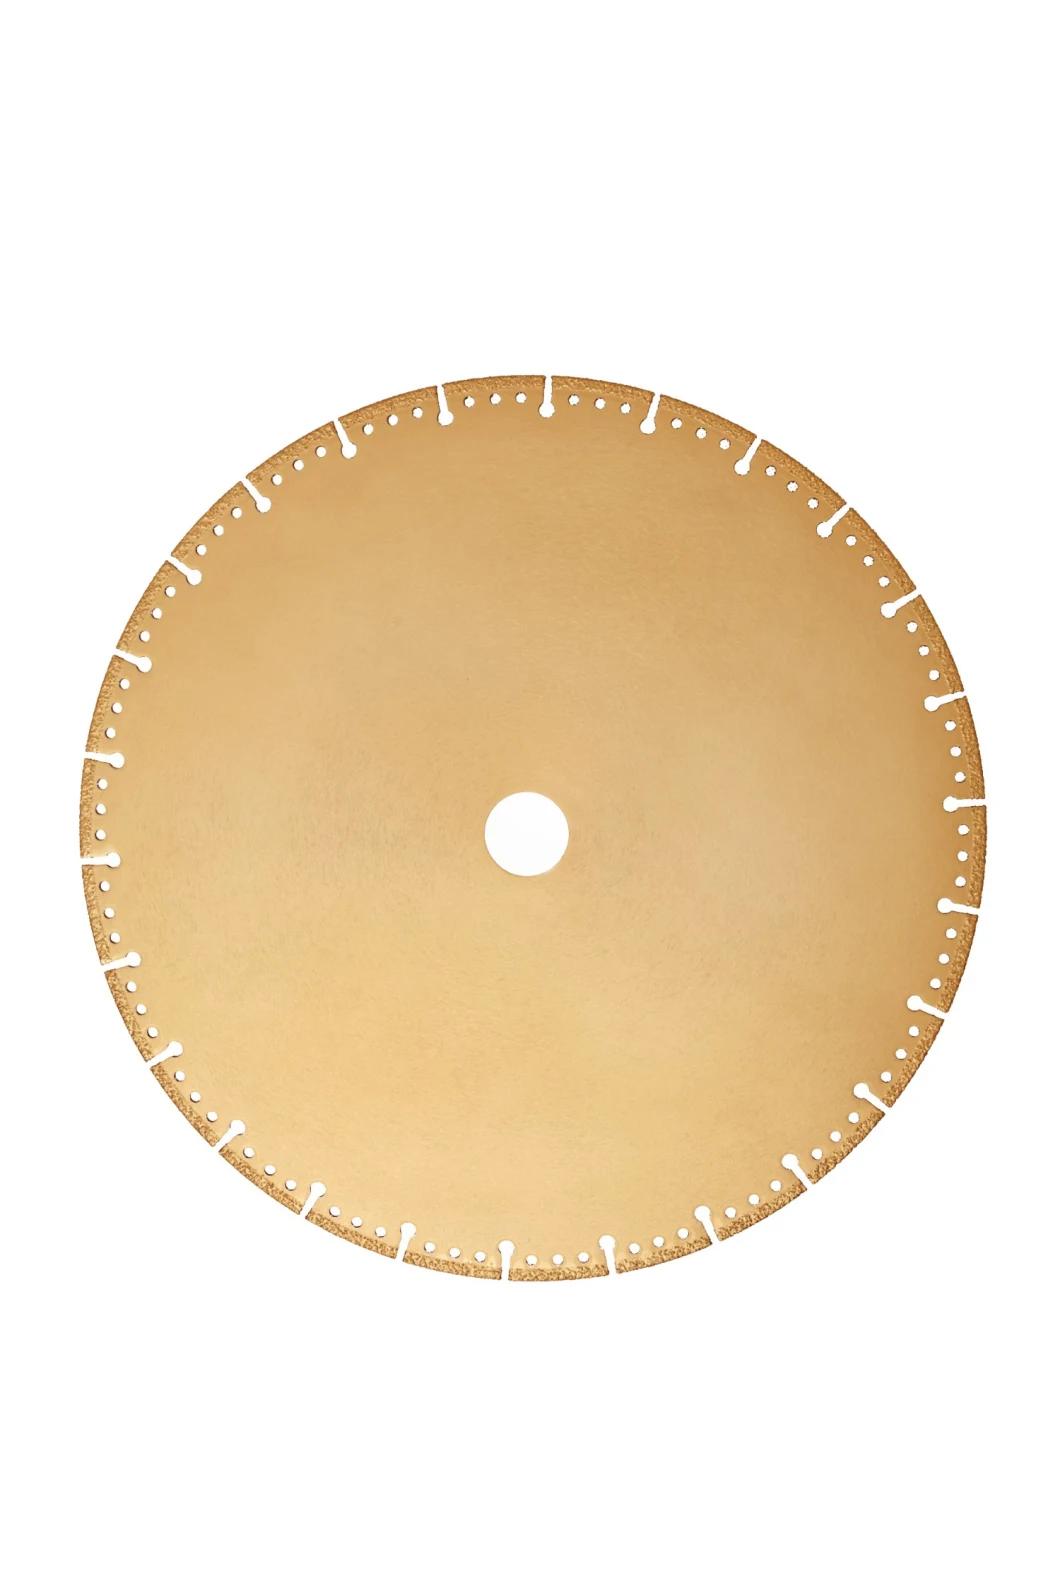 Taa Brand Factory Supply Diamond Cutting Disc 125mm 150mm 180mm